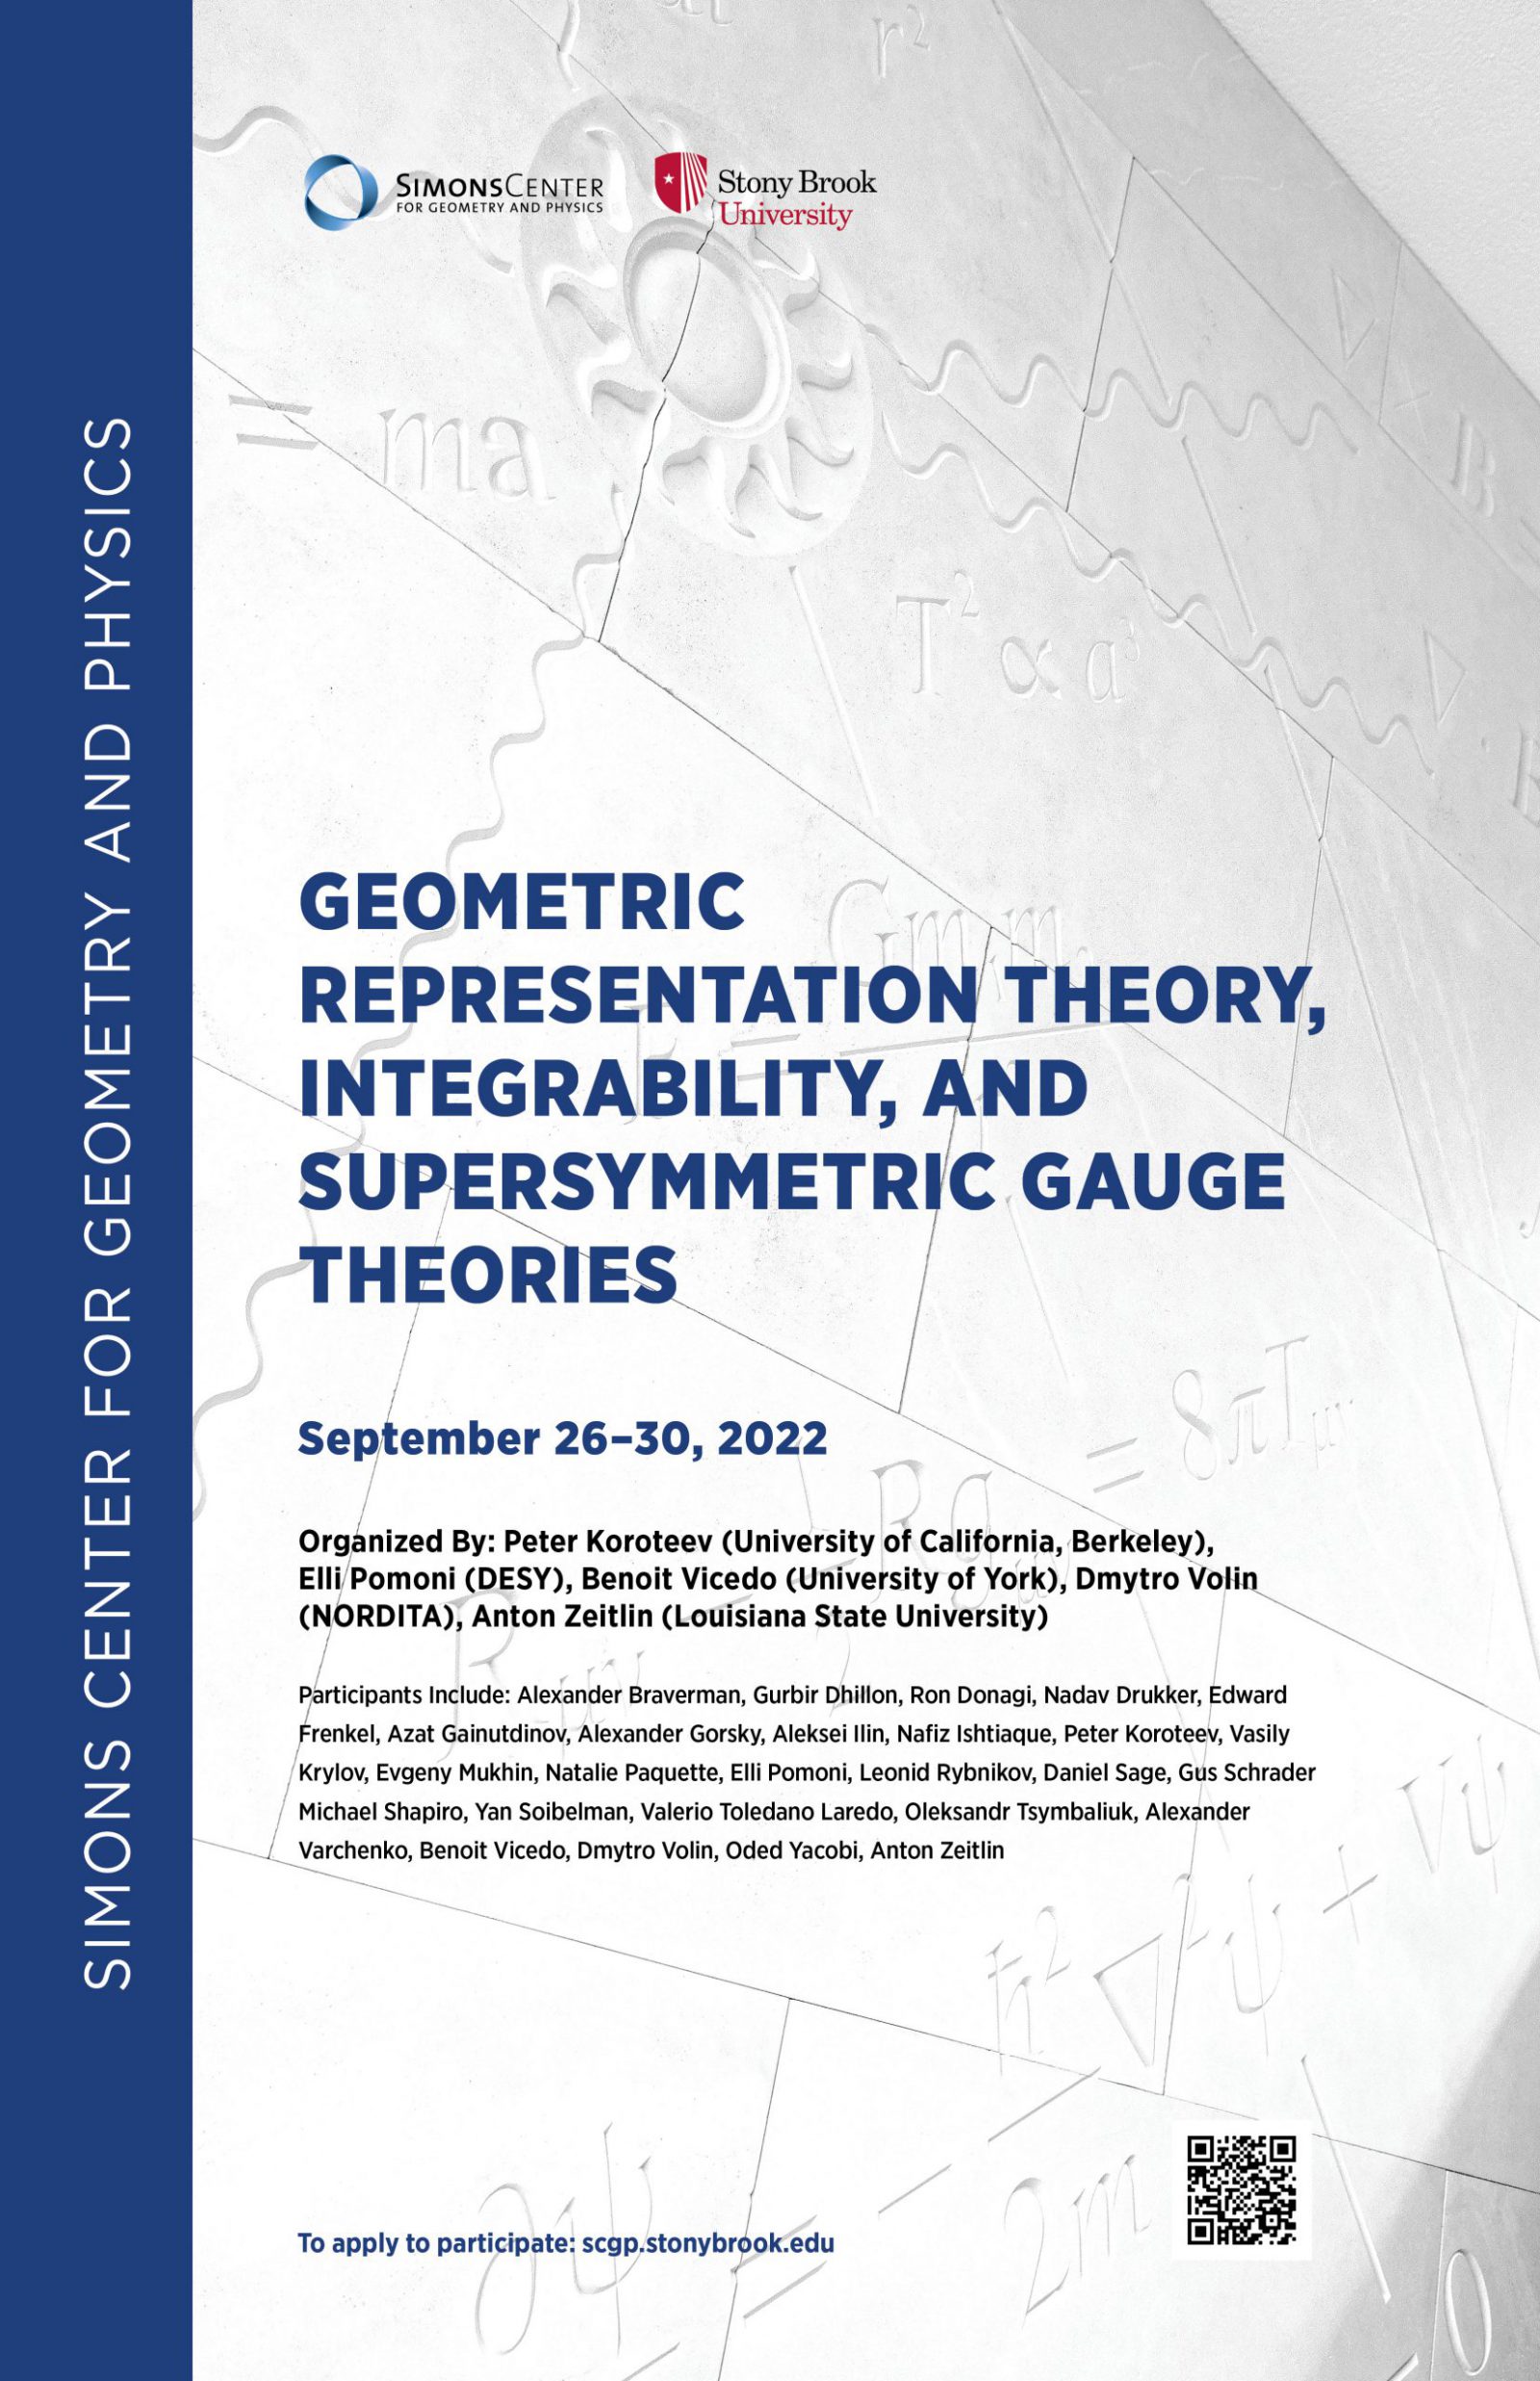 Geometric Representation Theory 9_26_22 PSTR VERT BLUE (1)